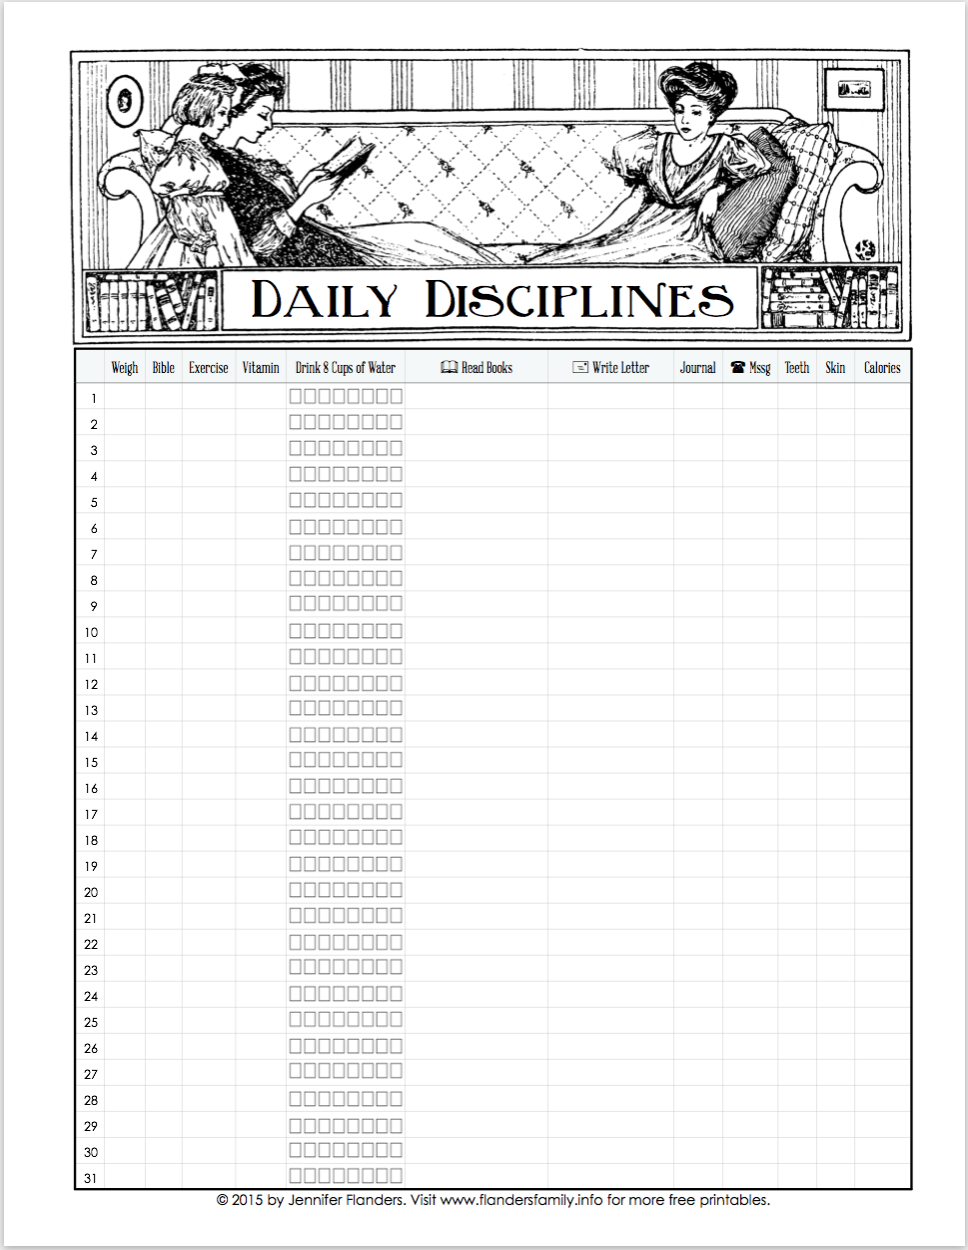 Daily Discipline Chart - Free Printable